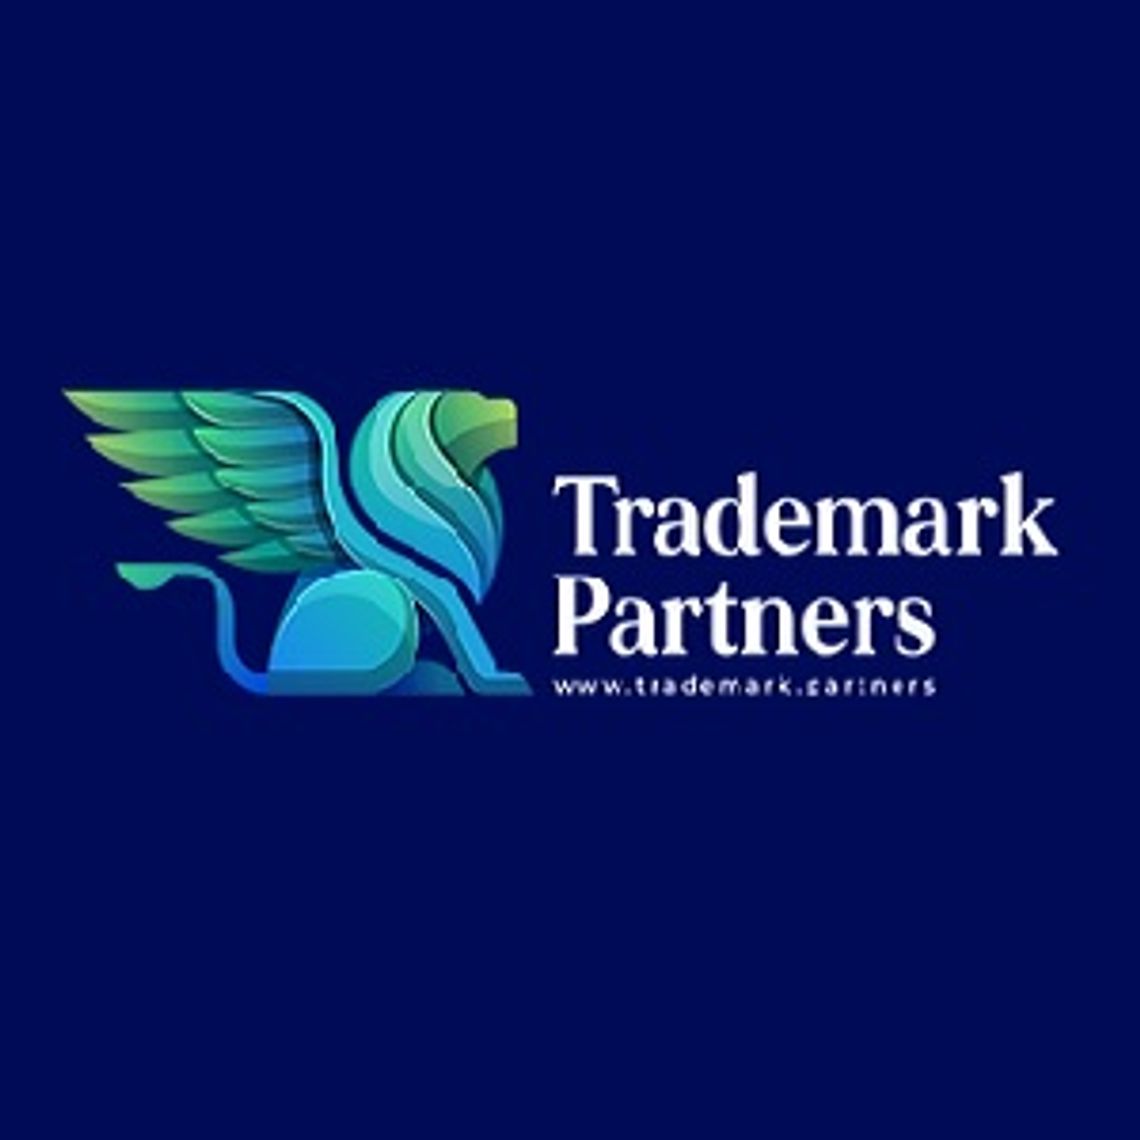 Znaki towarowe - Trademark Partners